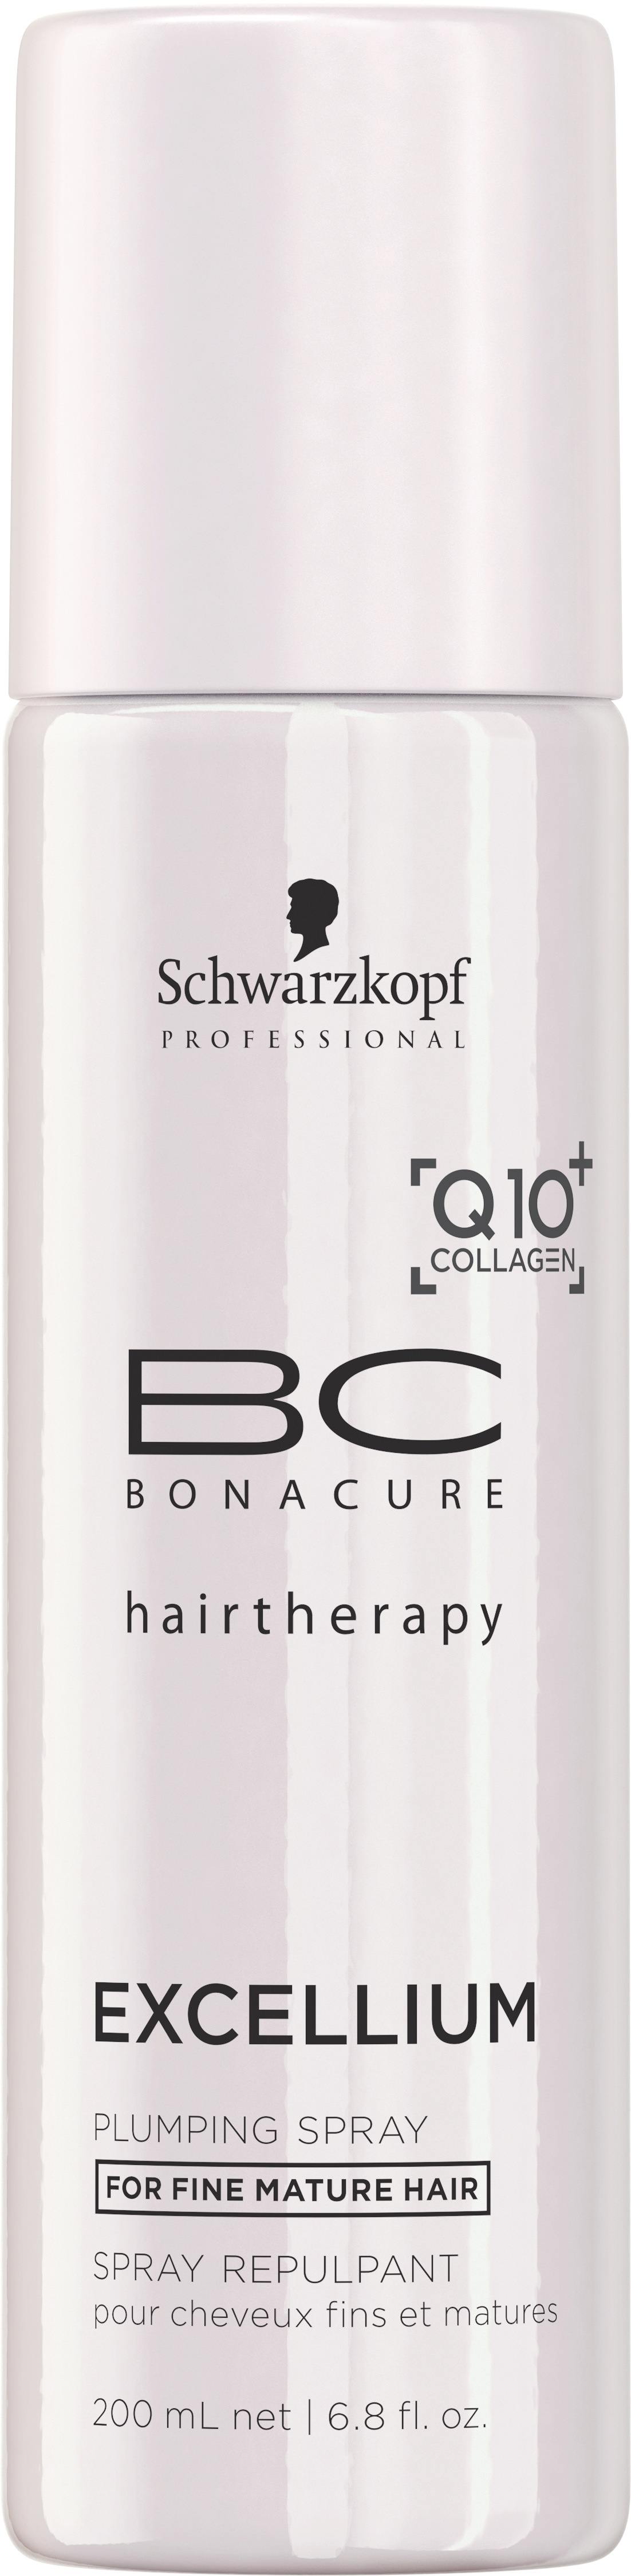 Schwarzkopf BC Excellium Plumping Spray Conditioner